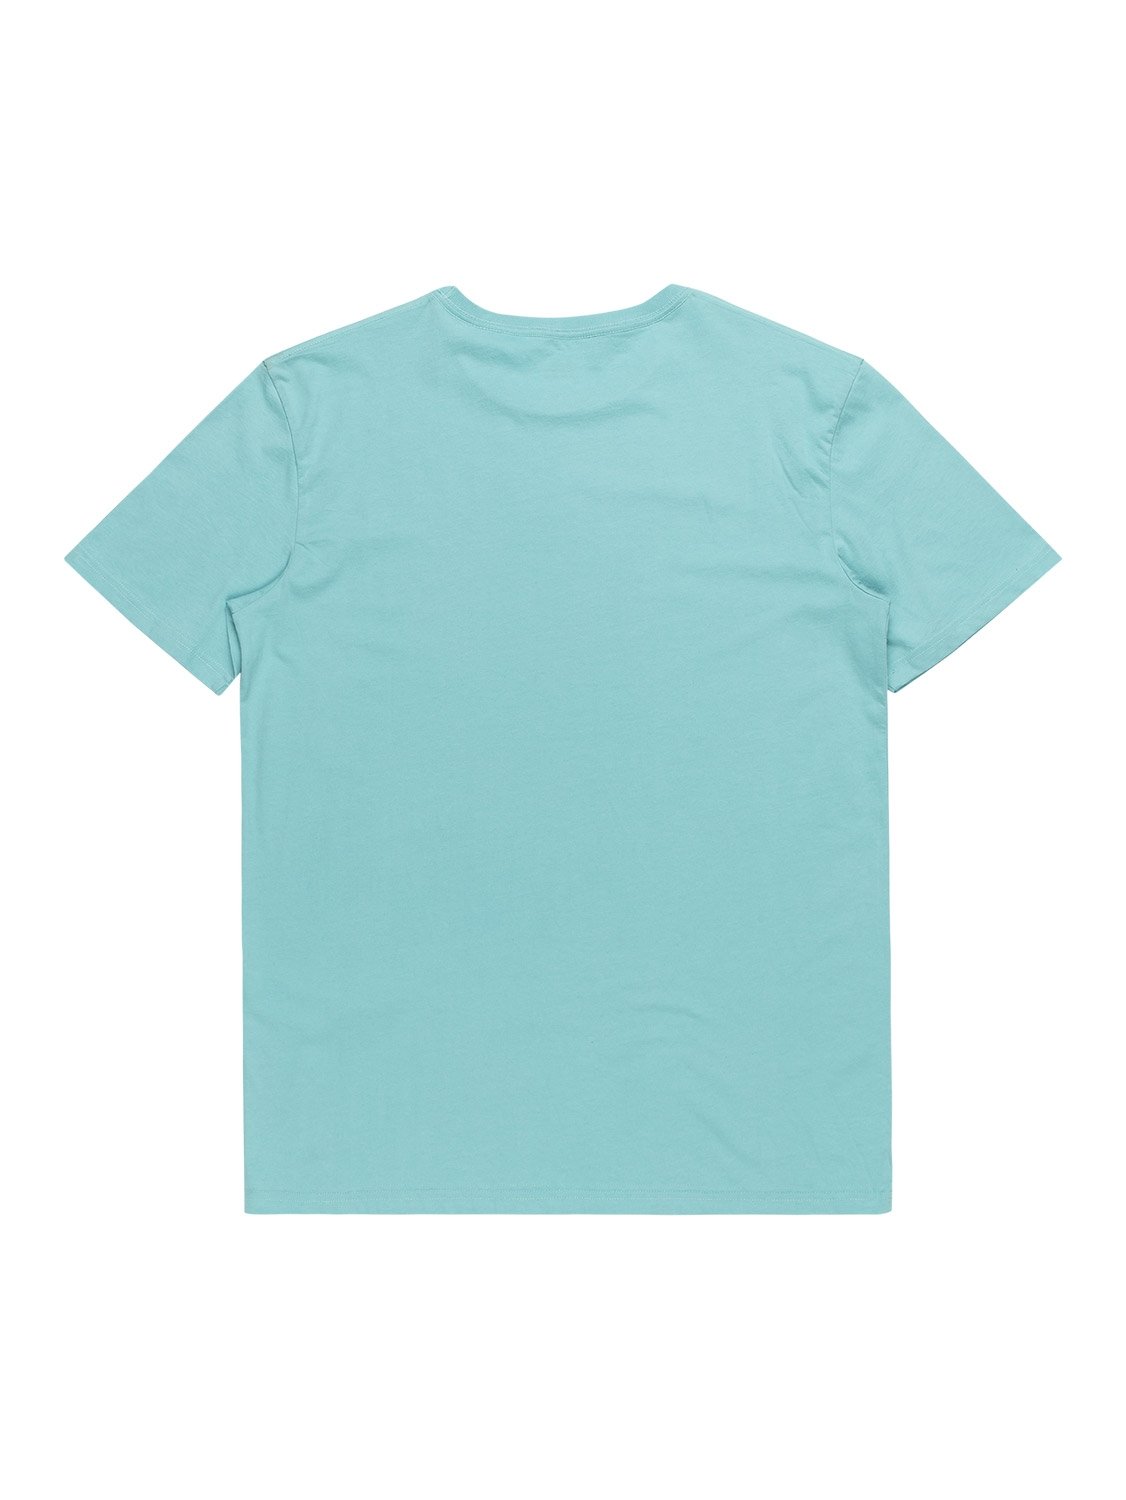 Quiksilver Men's Omni Fill T-Shirt